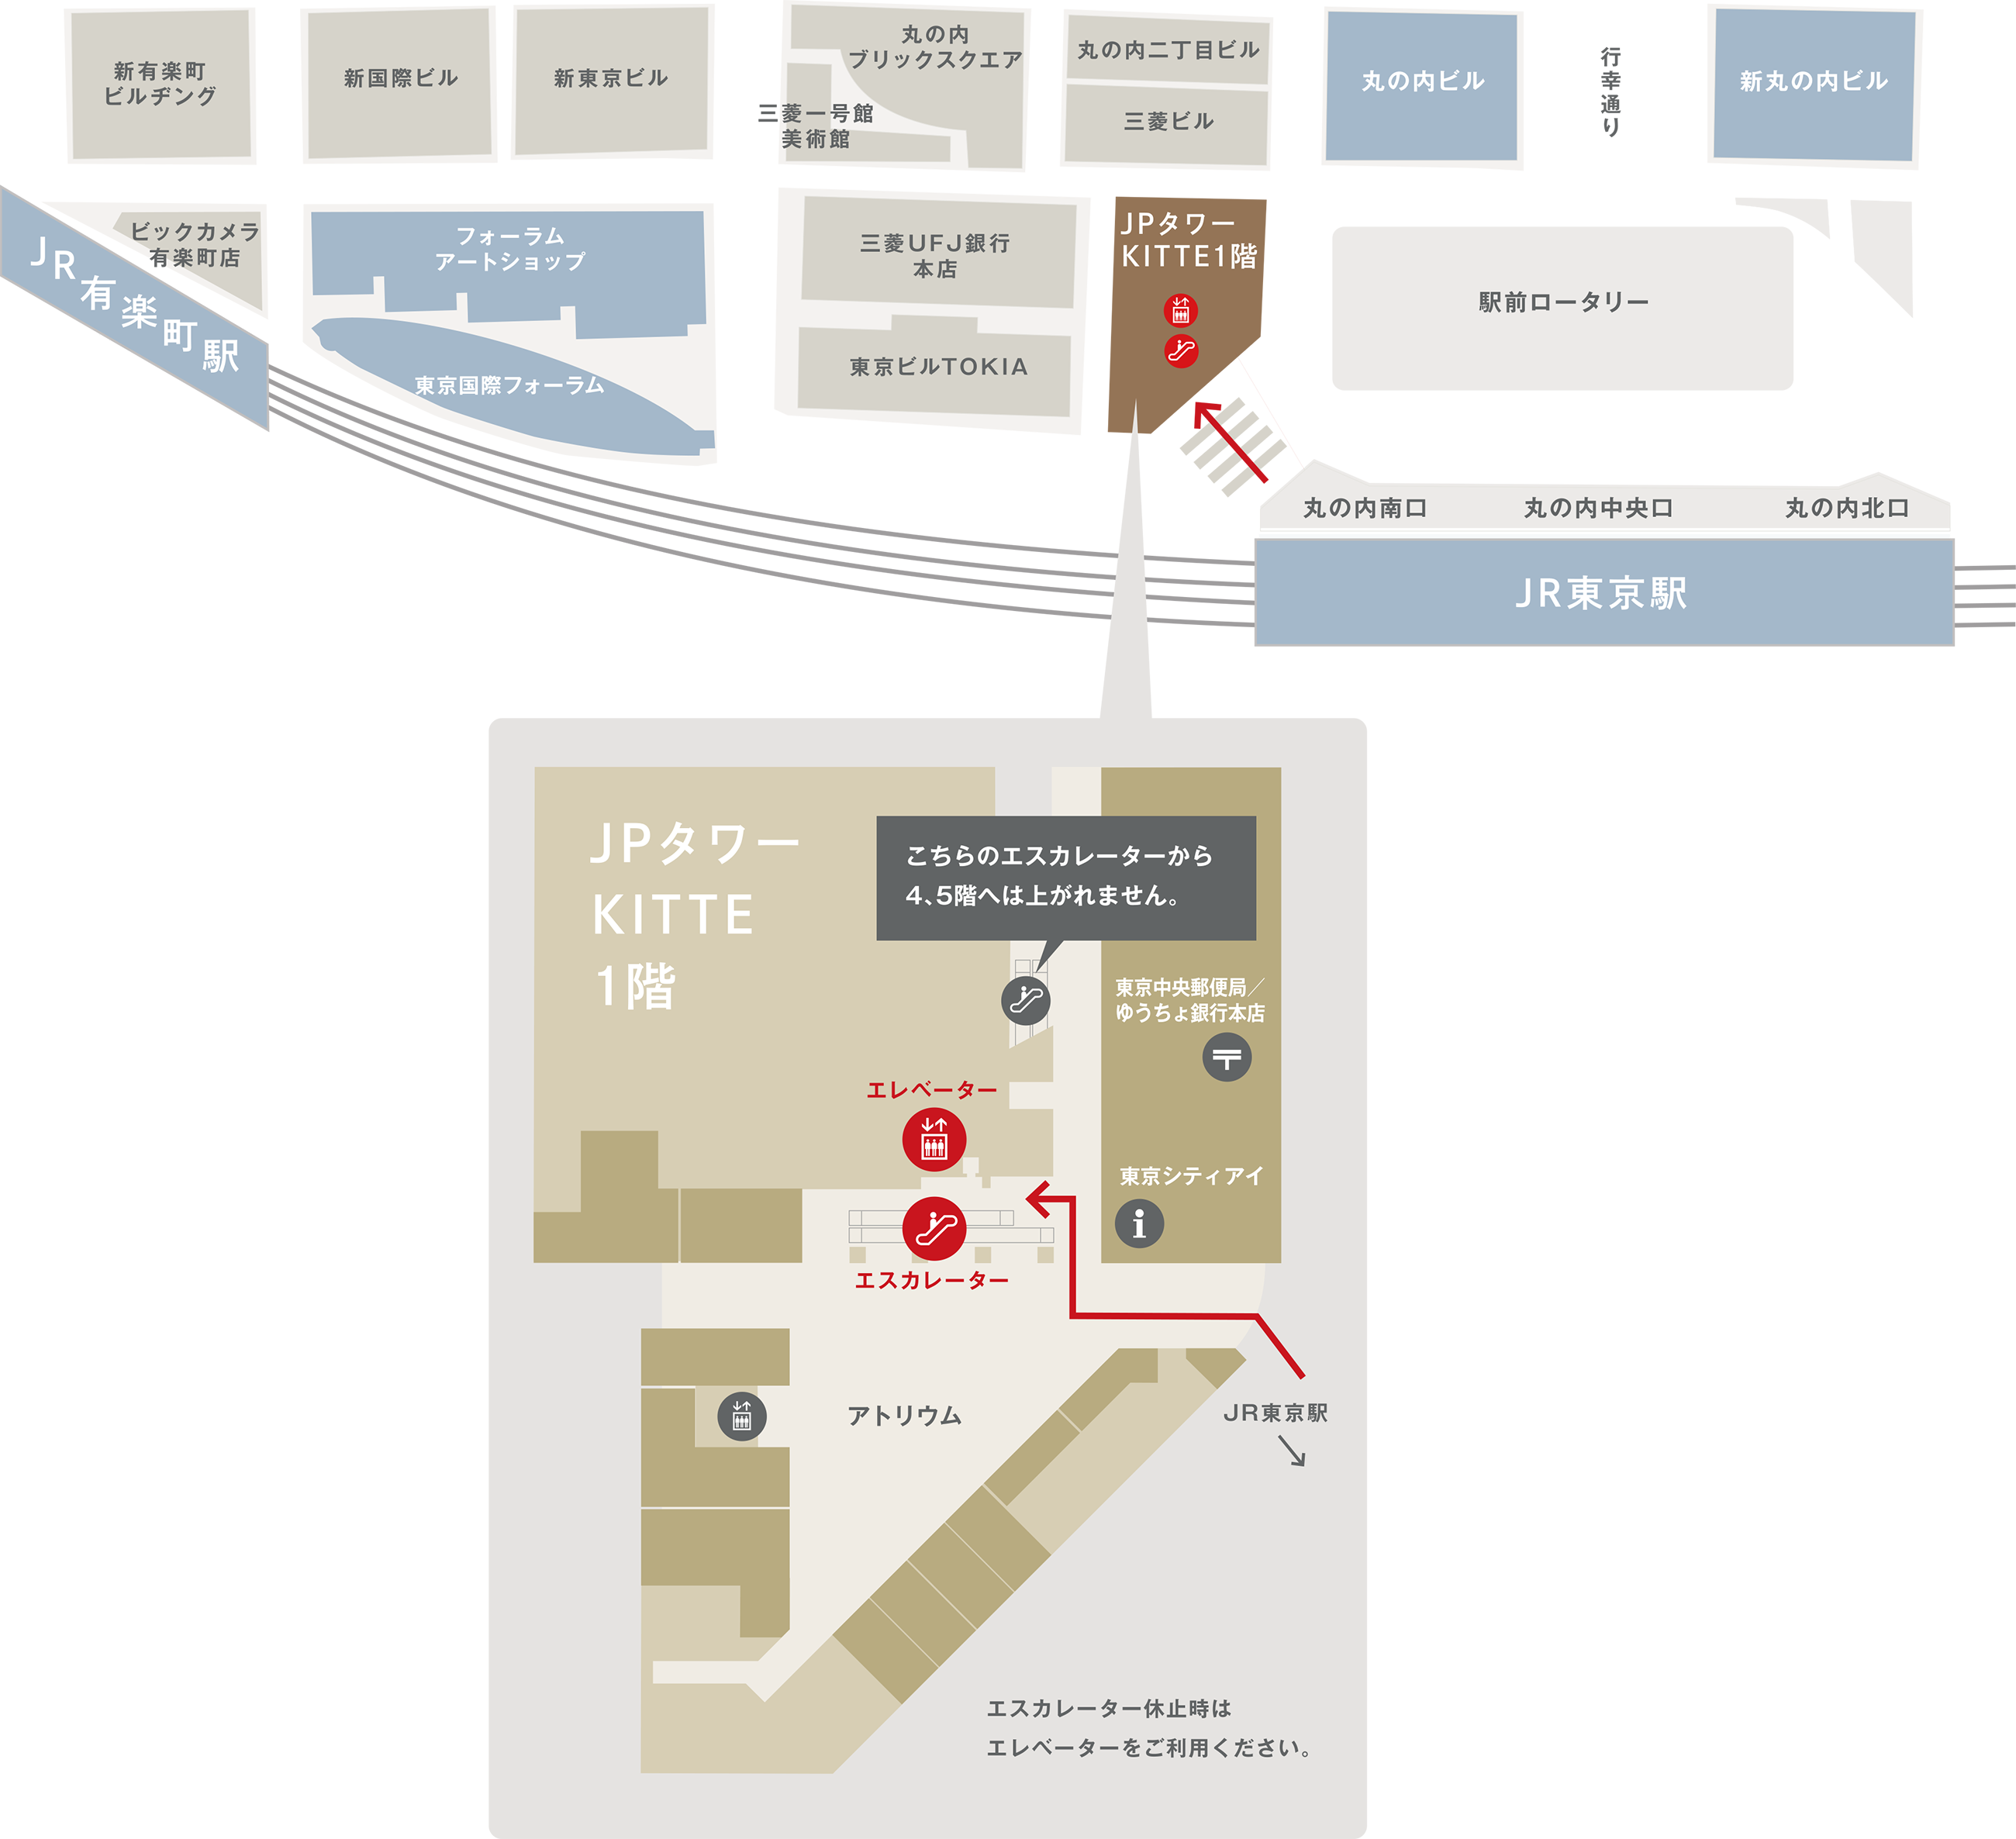 Jr東京駅丸の内南口 地上 からのアクセス ｊｐタワー ホール カンファレンス